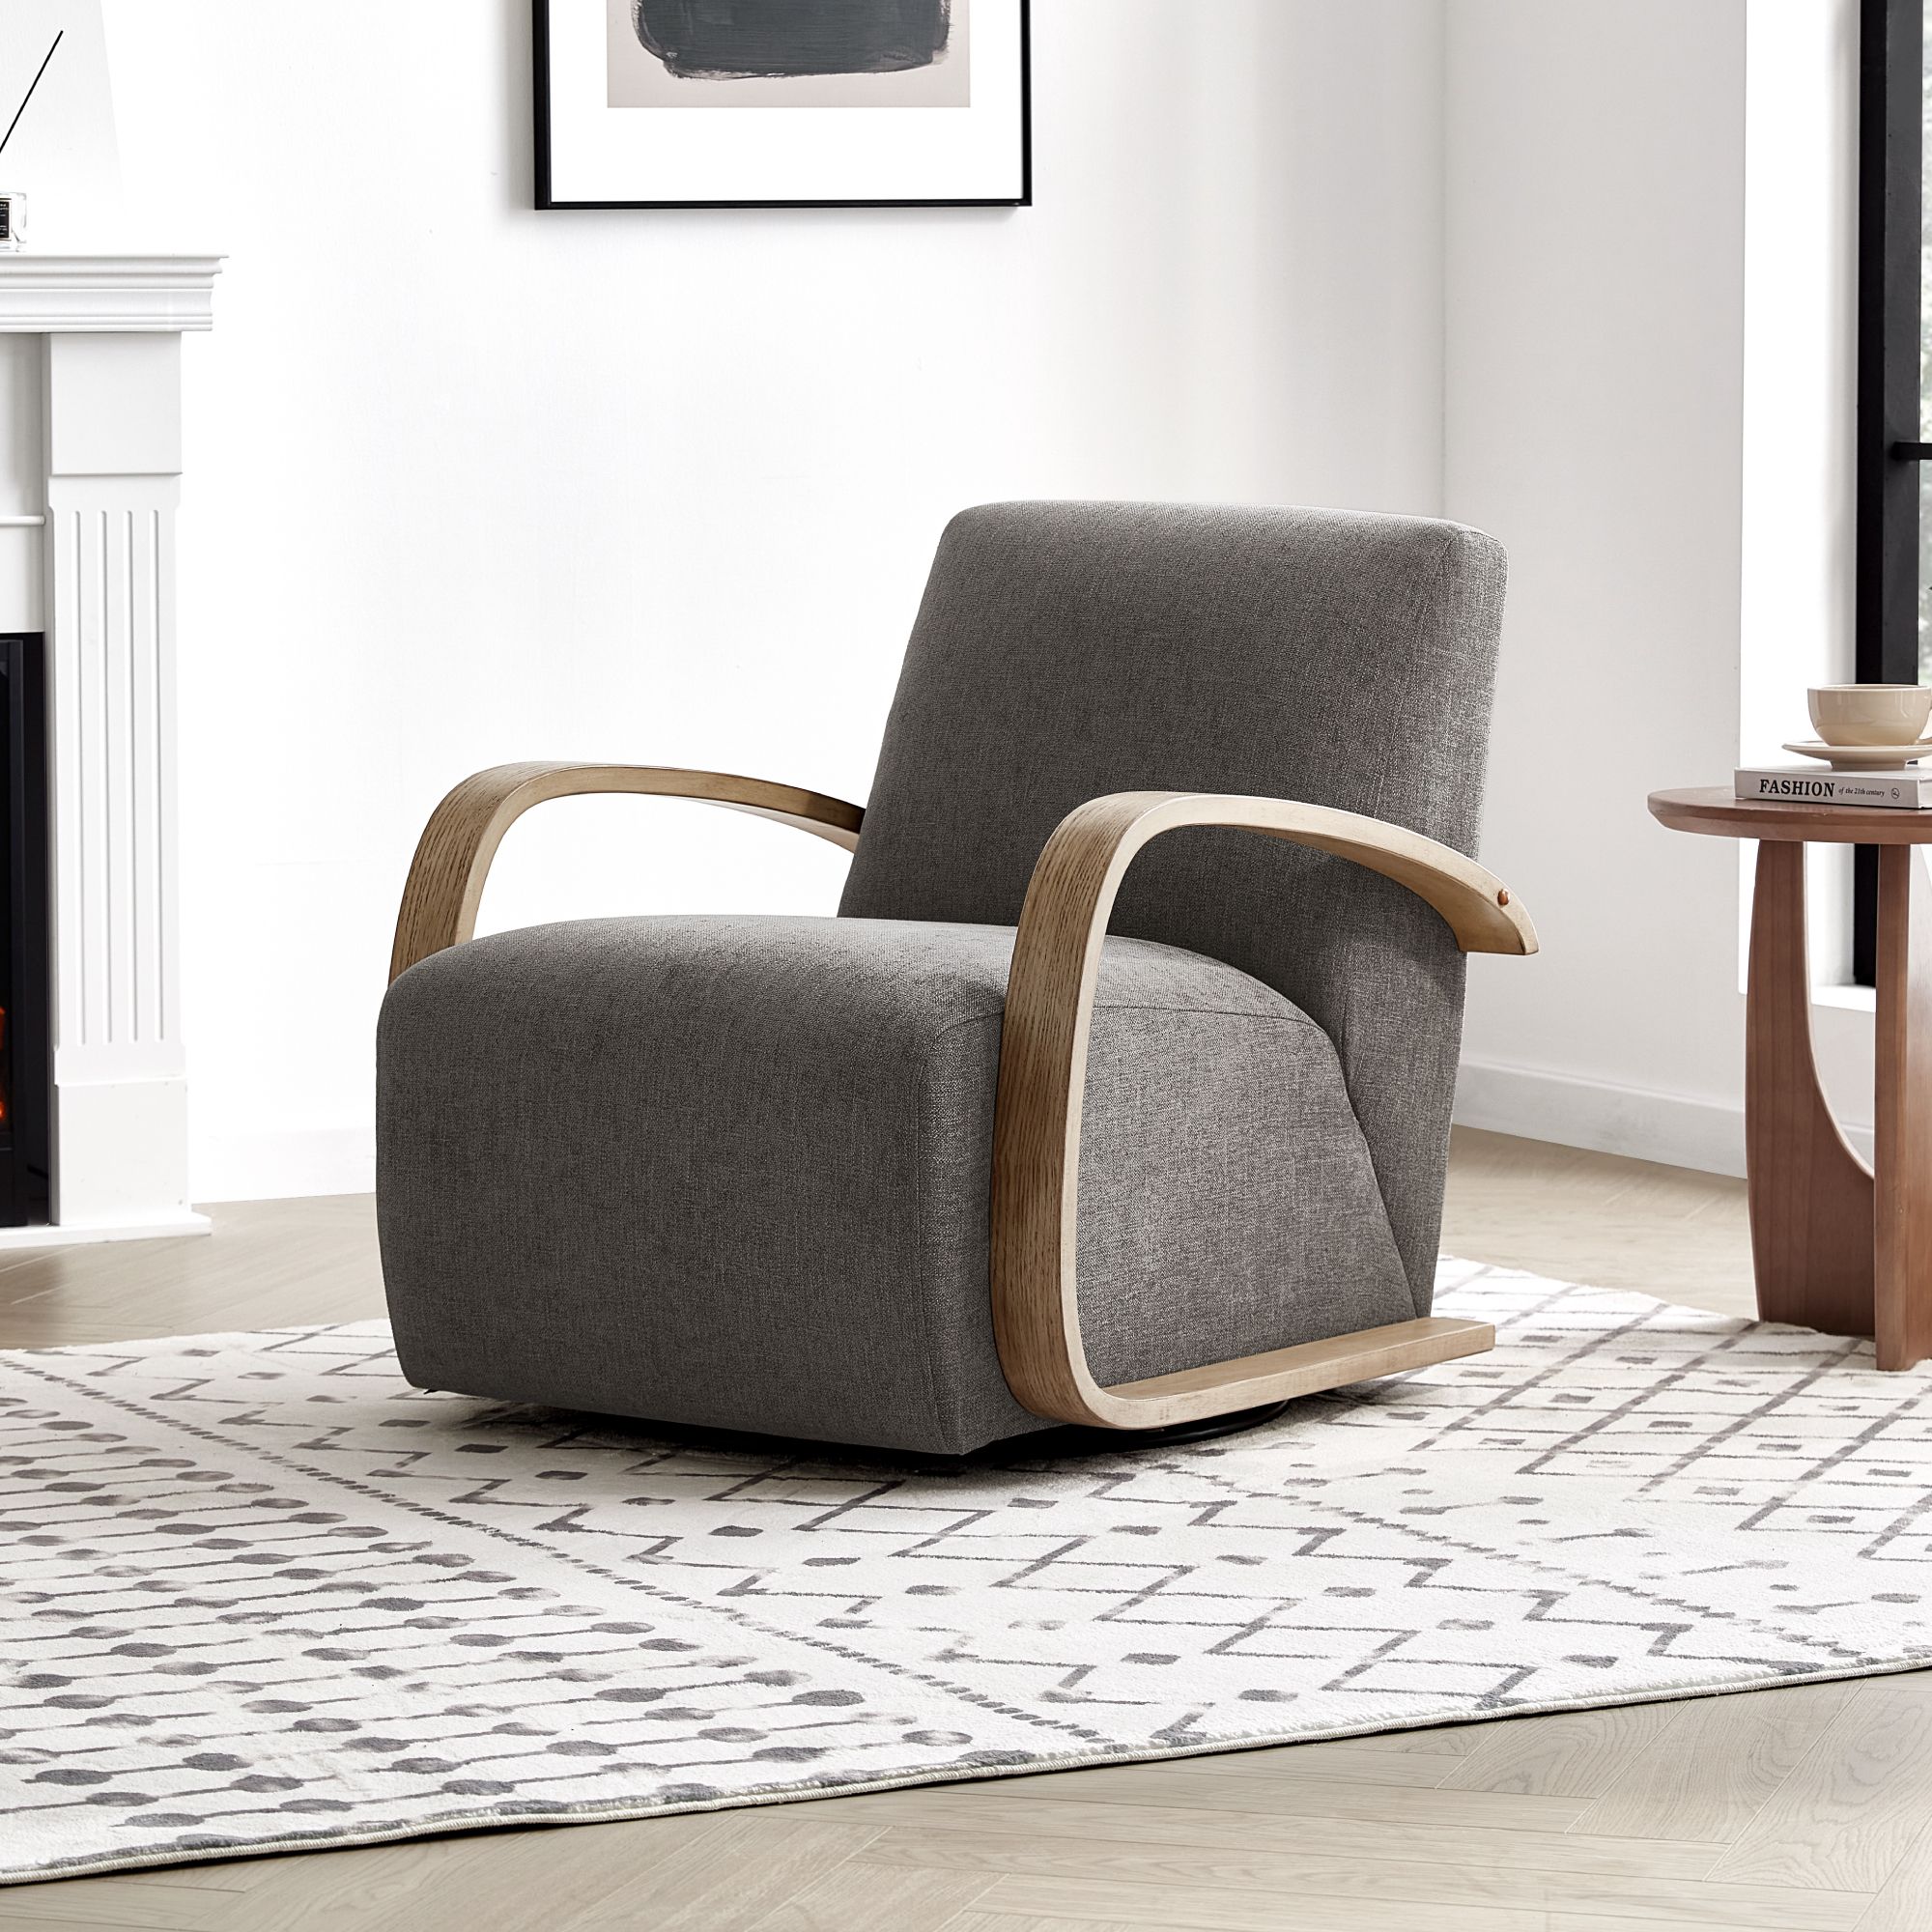 CHITA Swivel Accent Chair with U-shaped Wood Arm for Living Room Beedroom, Dark Gray & Gray Wood | Walmart (US)